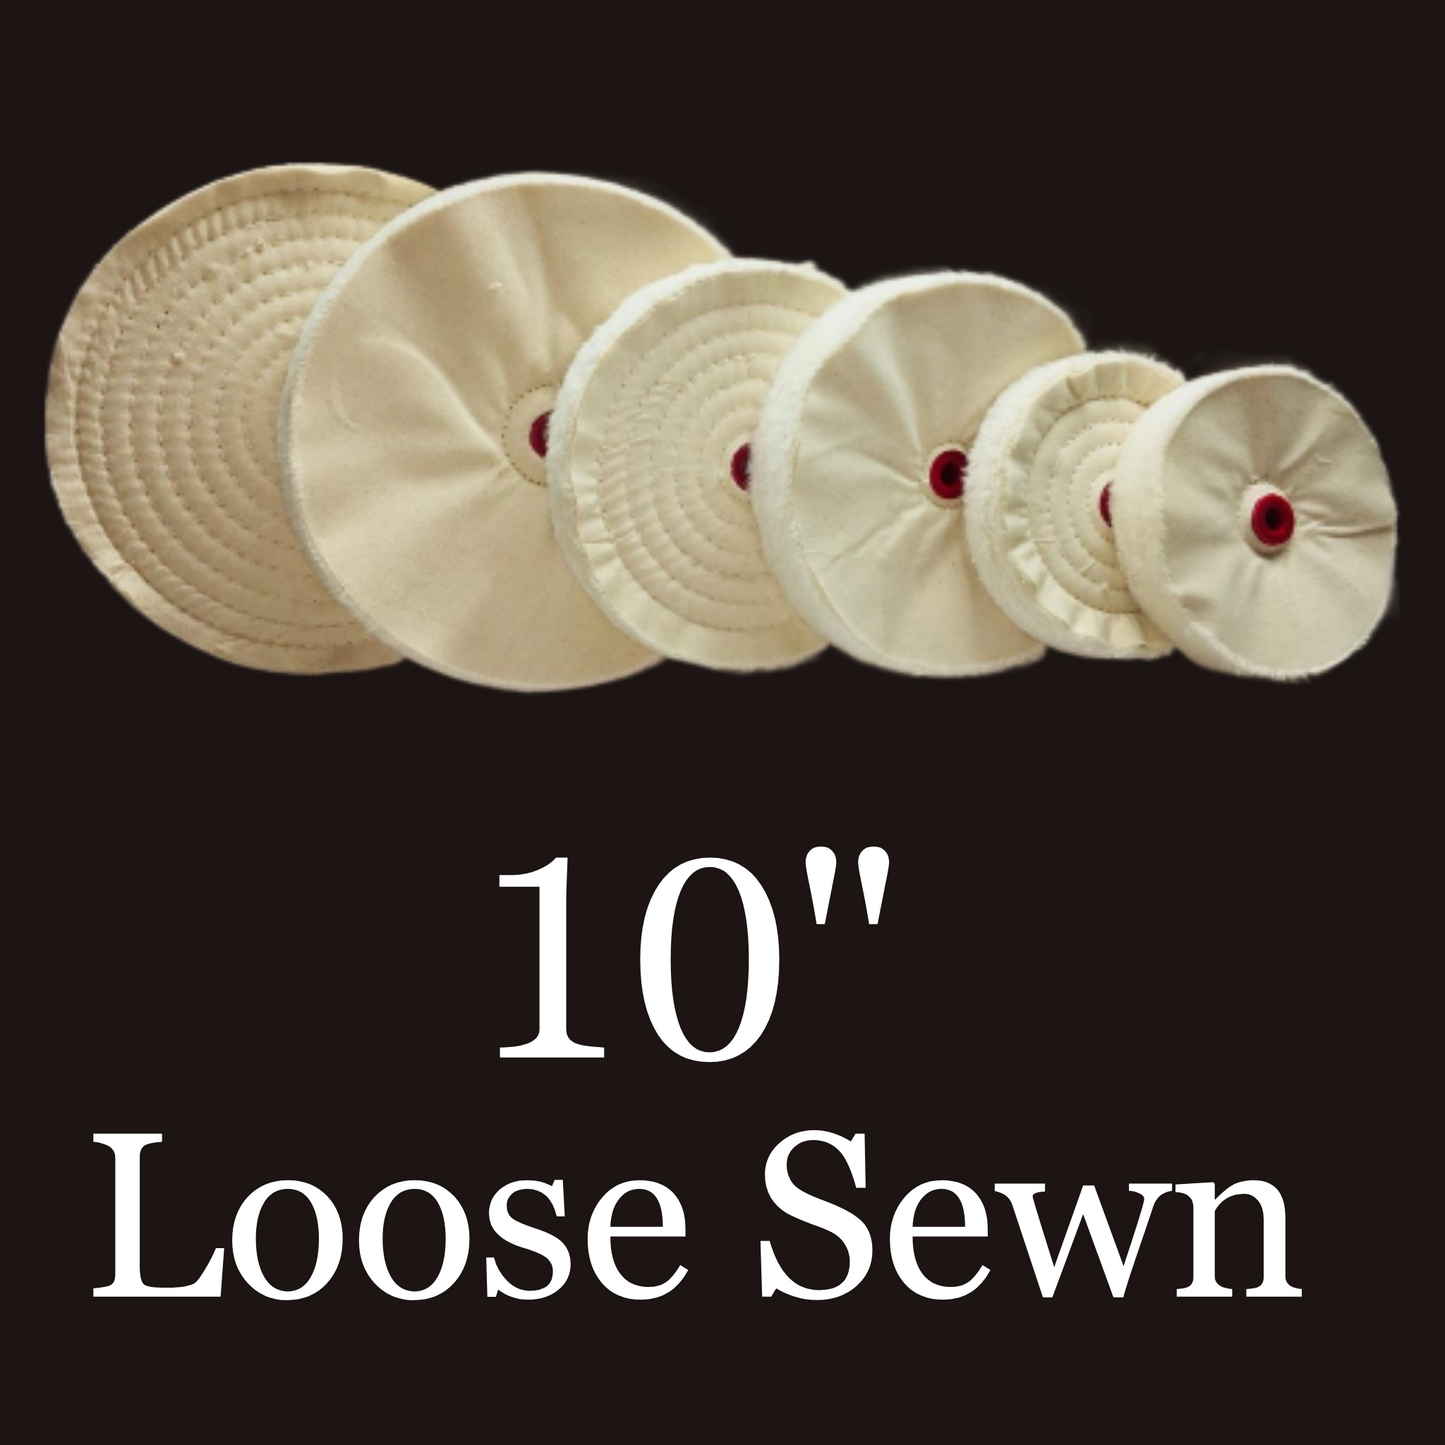 Loose Sewn Cotton Buffing 10” Wheels